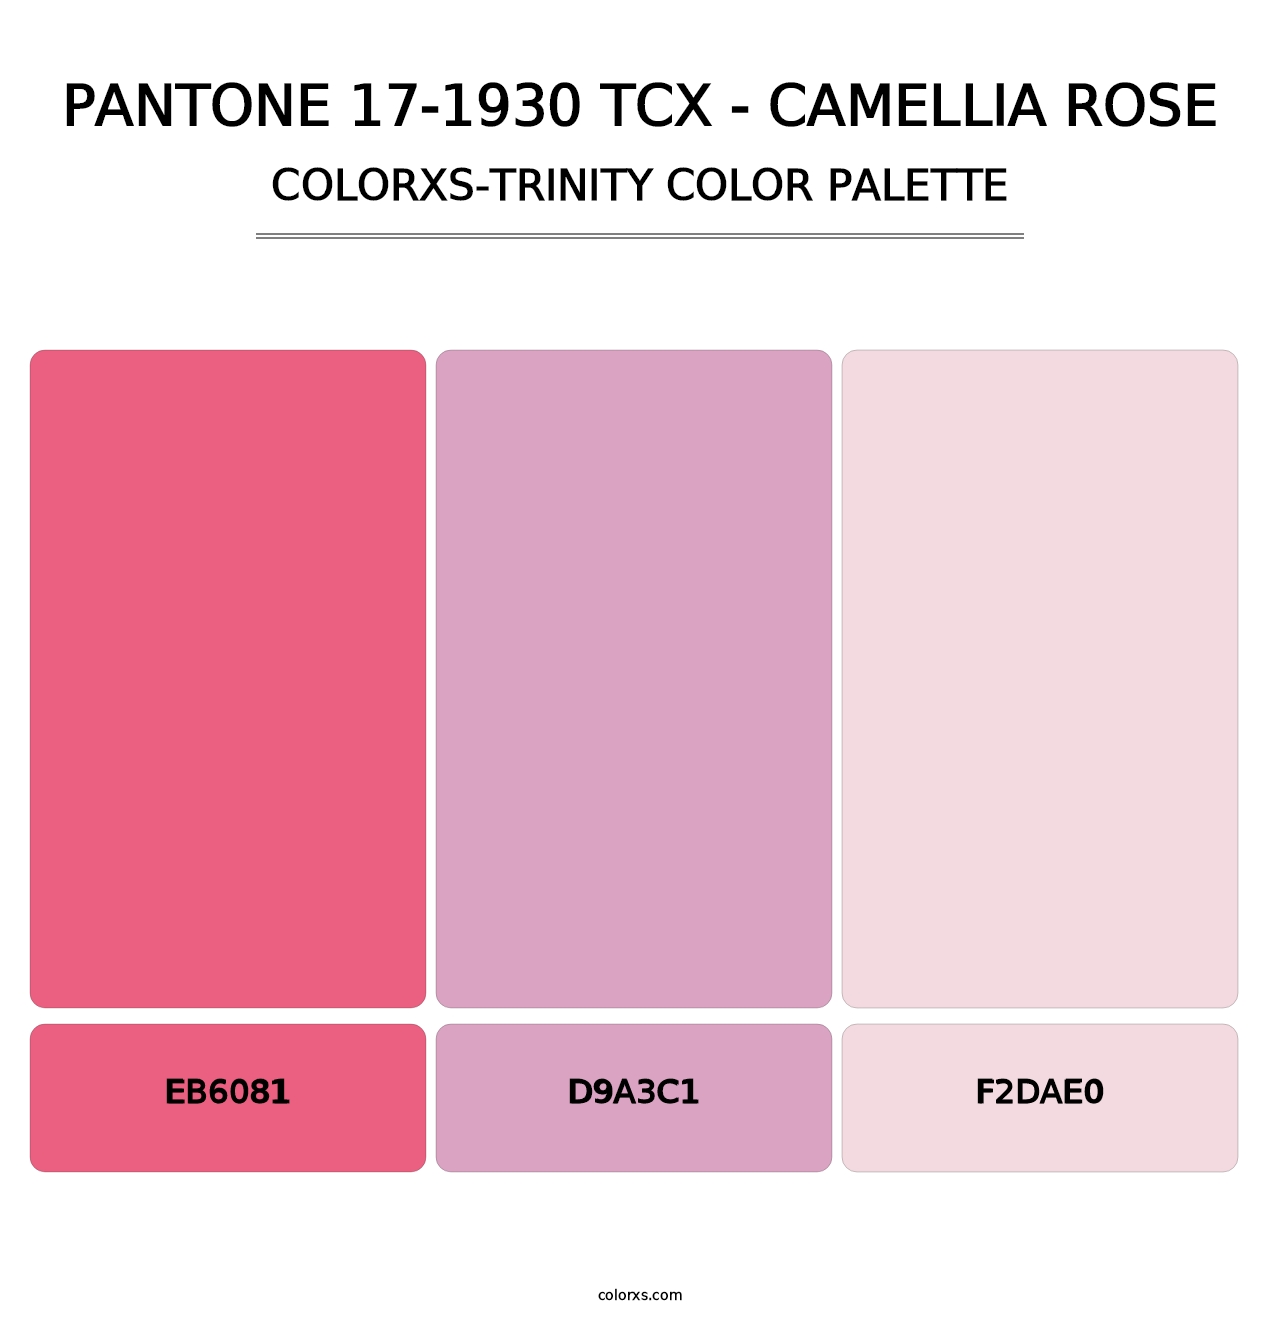 PANTONE 17-1930 TCX - Camellia Rose - Colorxs Trinity Palette